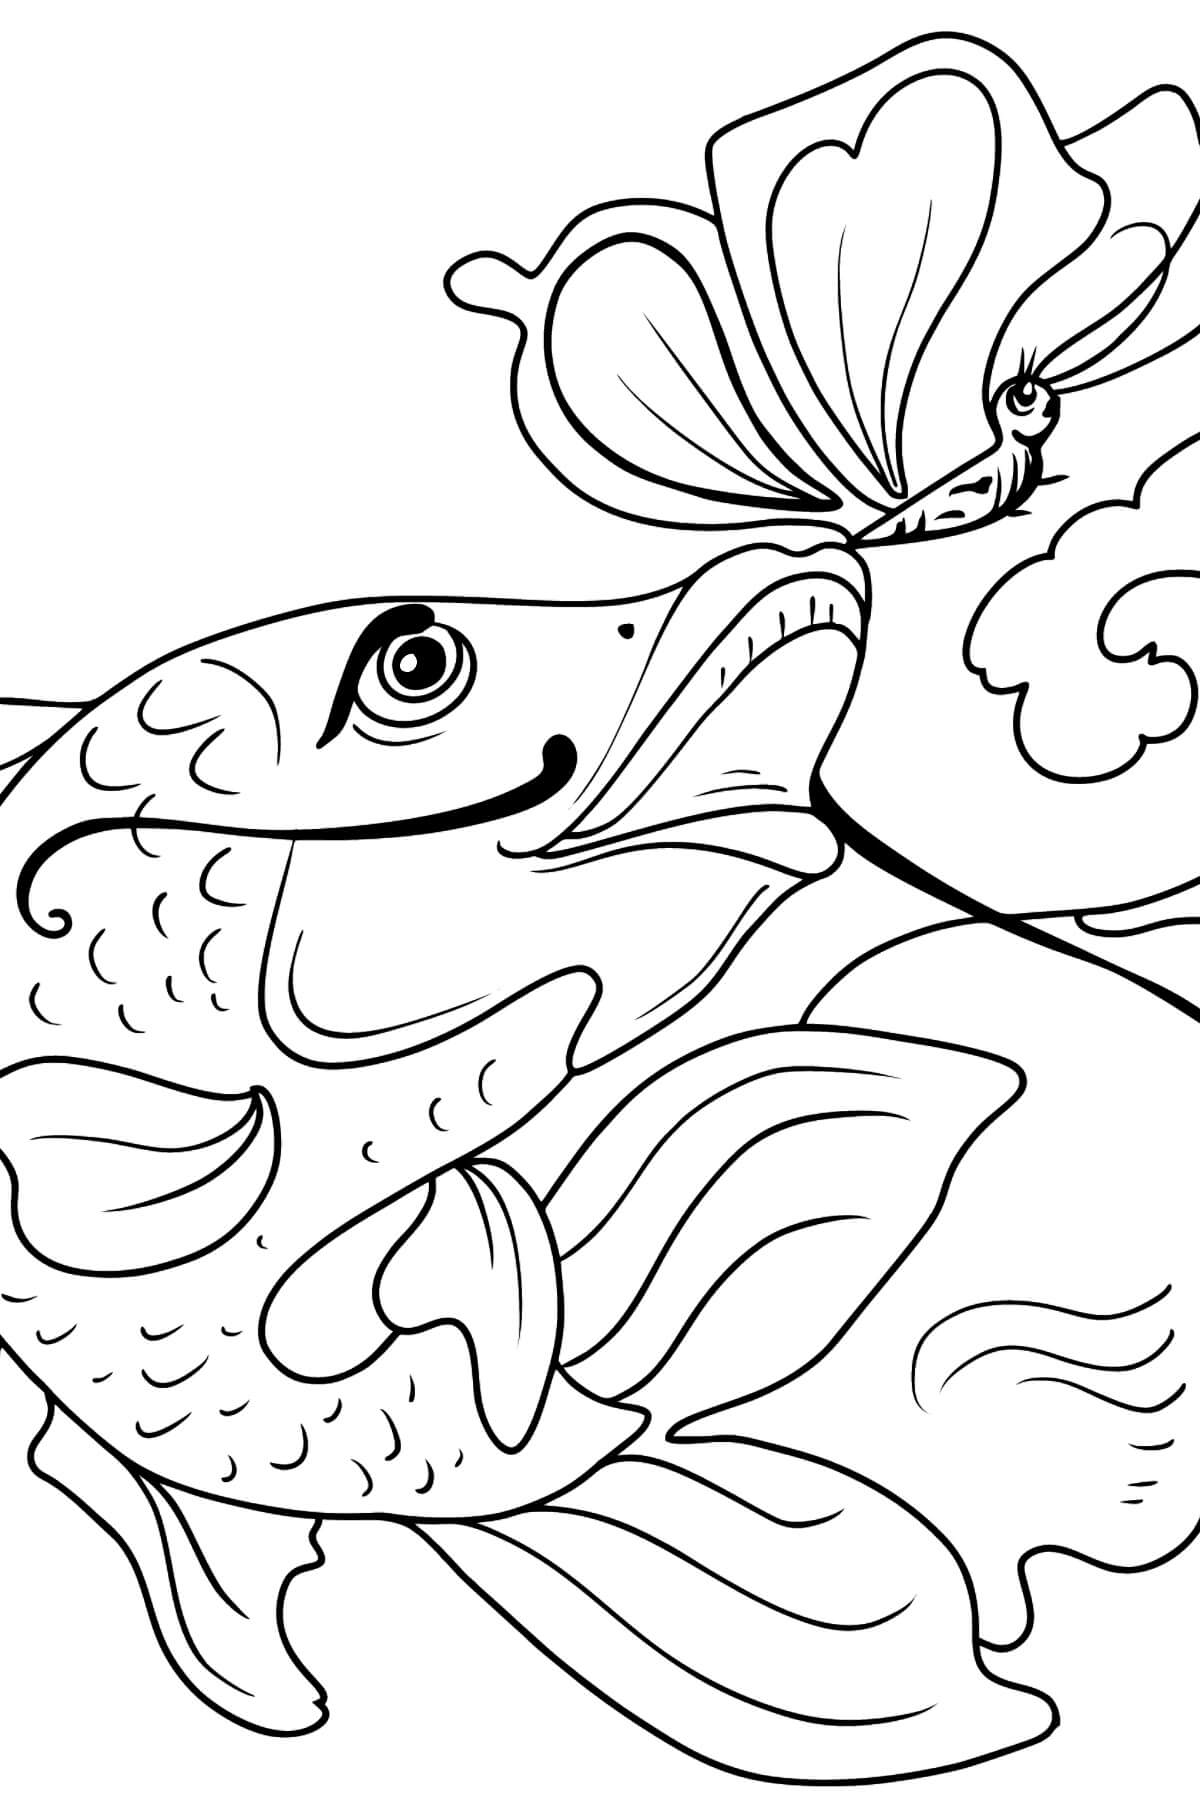 Desenhos de Peixe e Borboleta para colorir